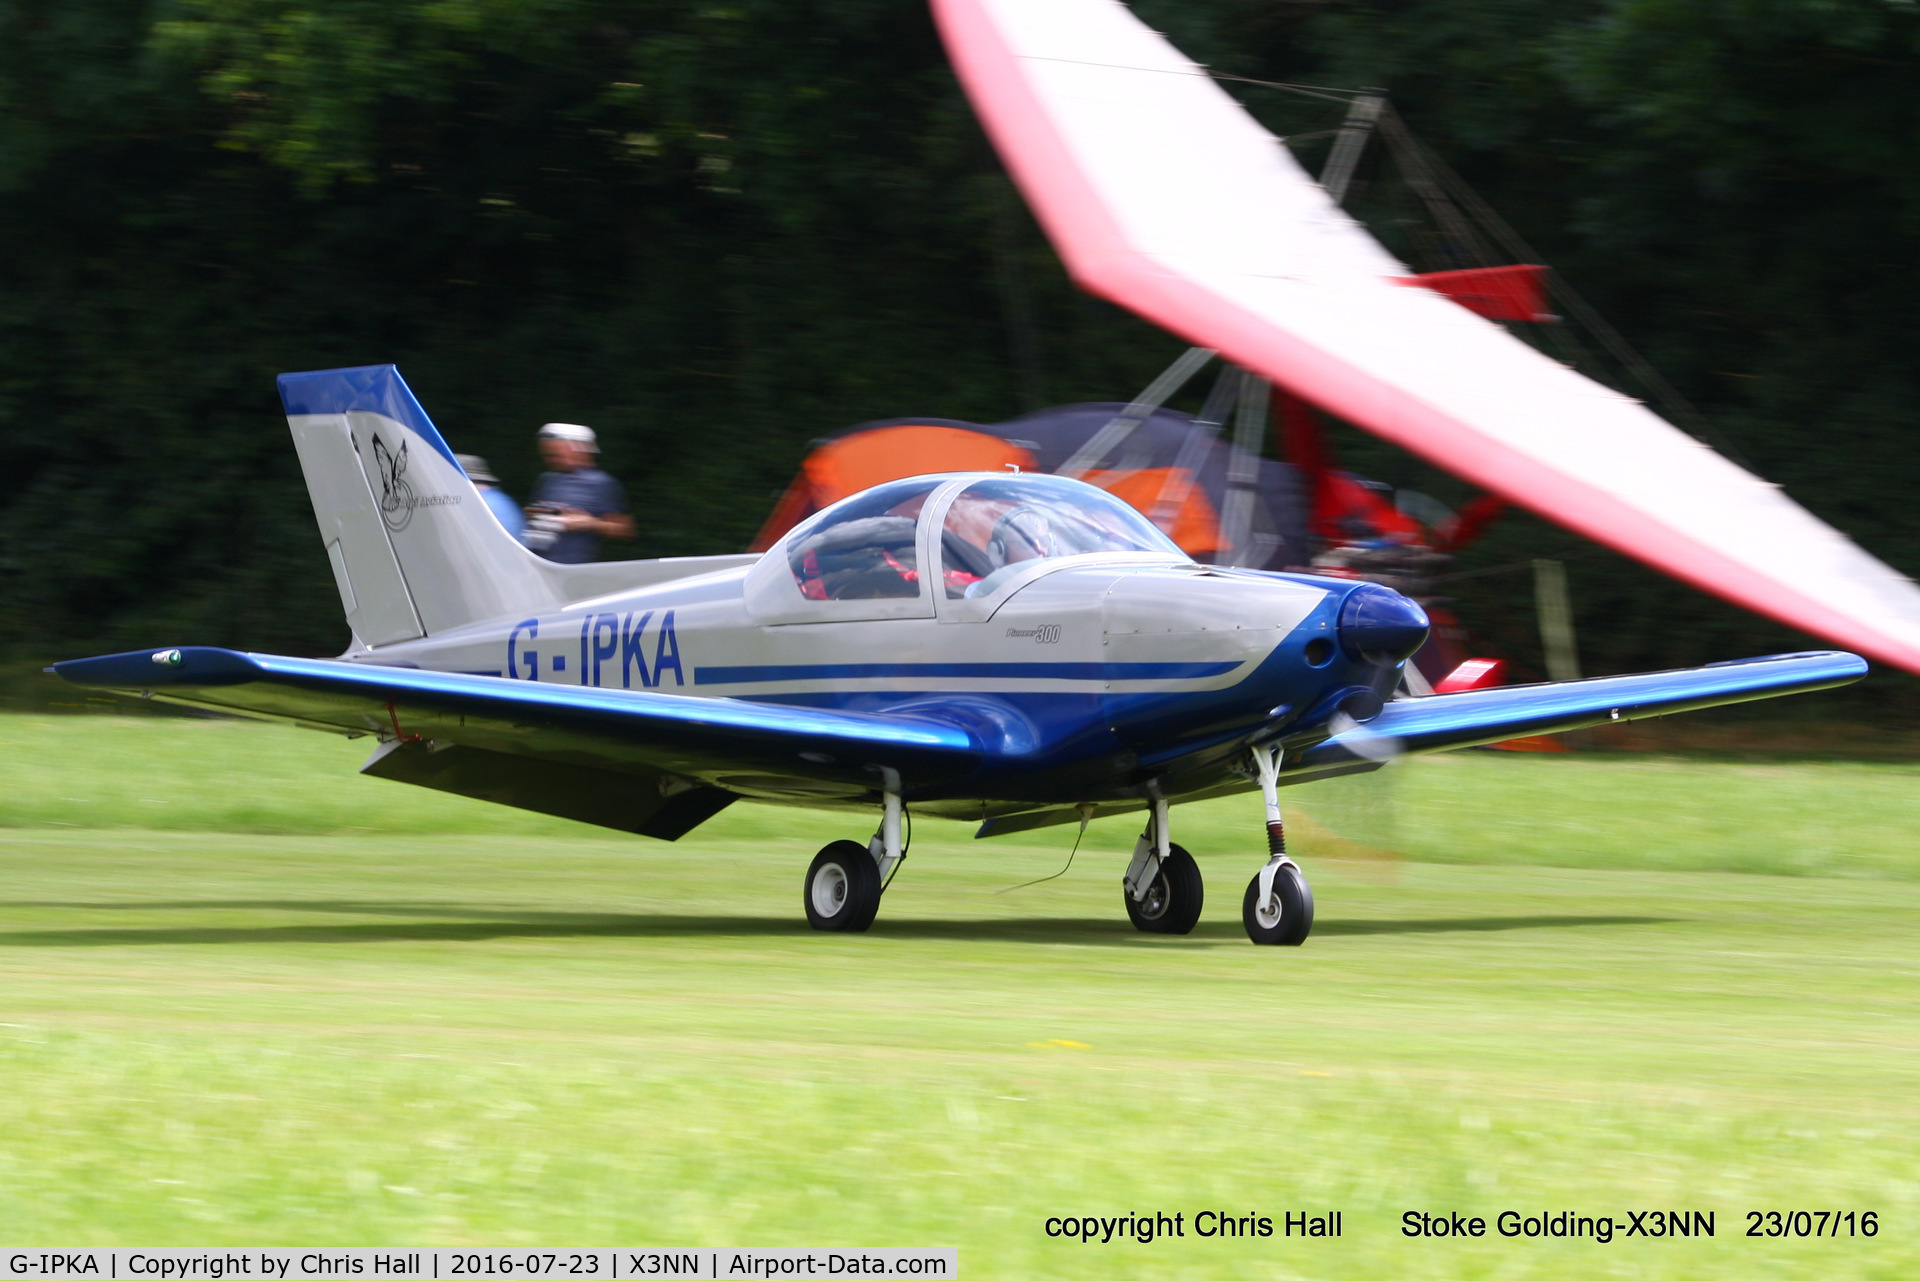 G-IPKA, 2005 Alpi Aviation Pioneer 300 C/N PFA 330-14355, Stoke Golding Stakeout 2016